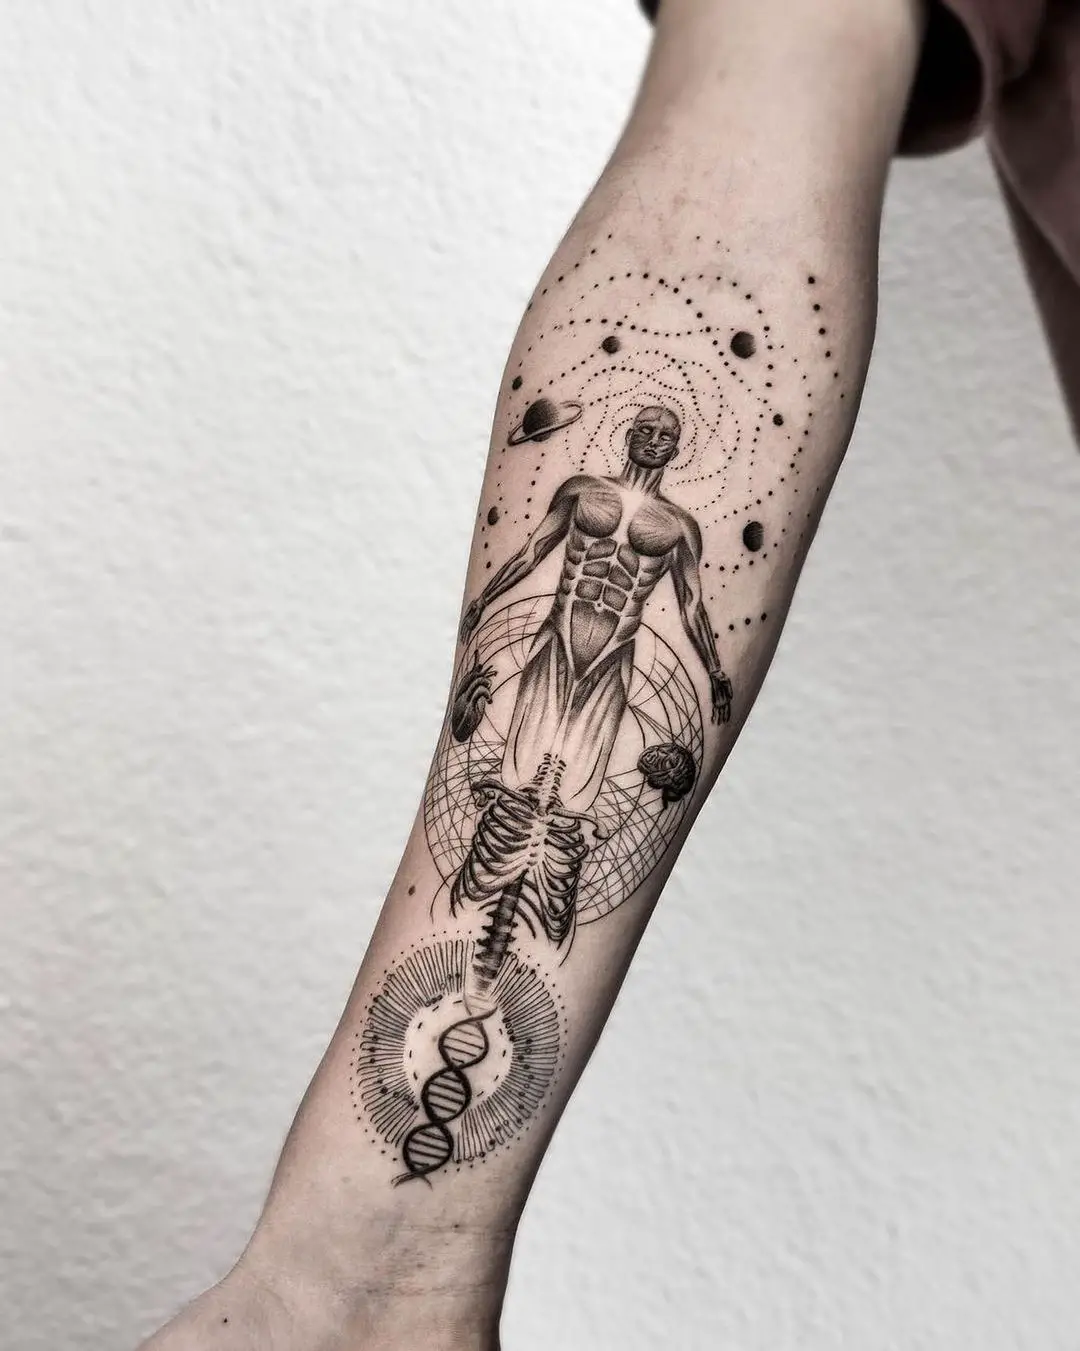 Space tattoo ideas for men by gab7sz